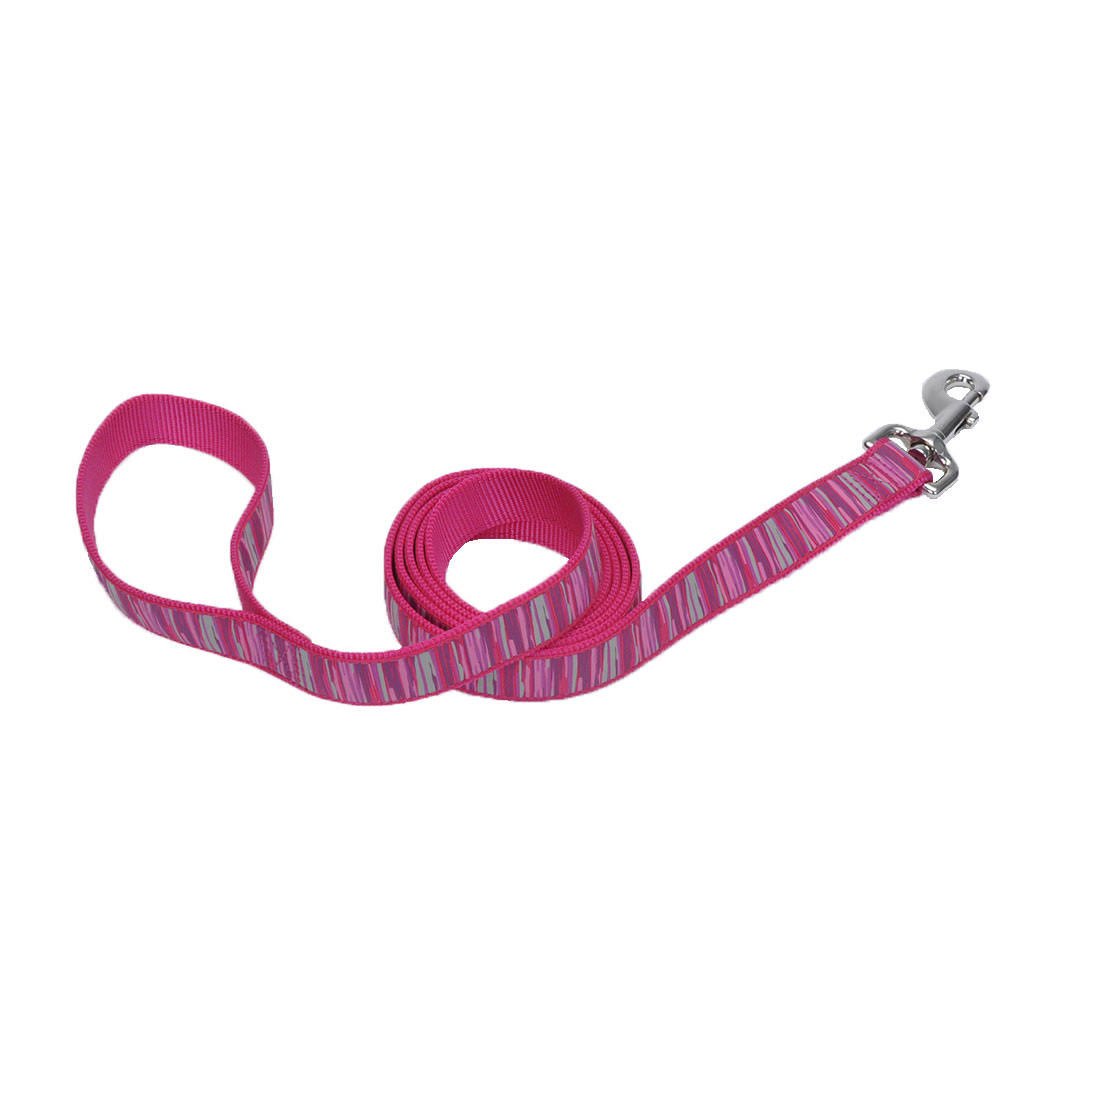 Coastal Pet Attire Ribbon Nylon Leash - 1in x 6ft, Pink Stripes